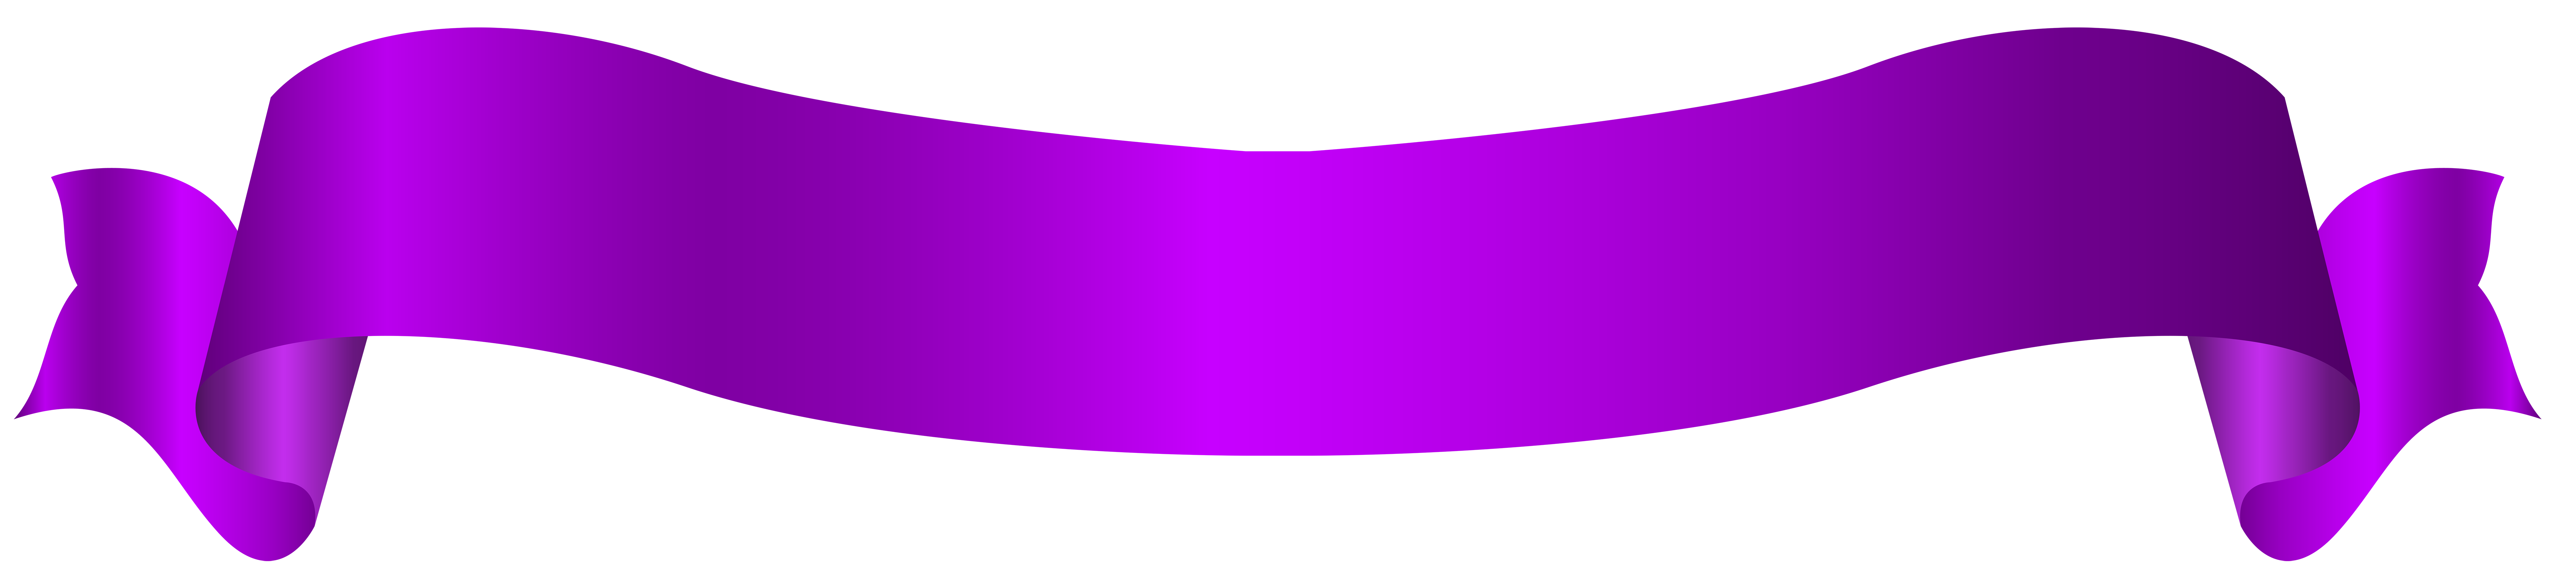 Gambar PNG Banner Violet